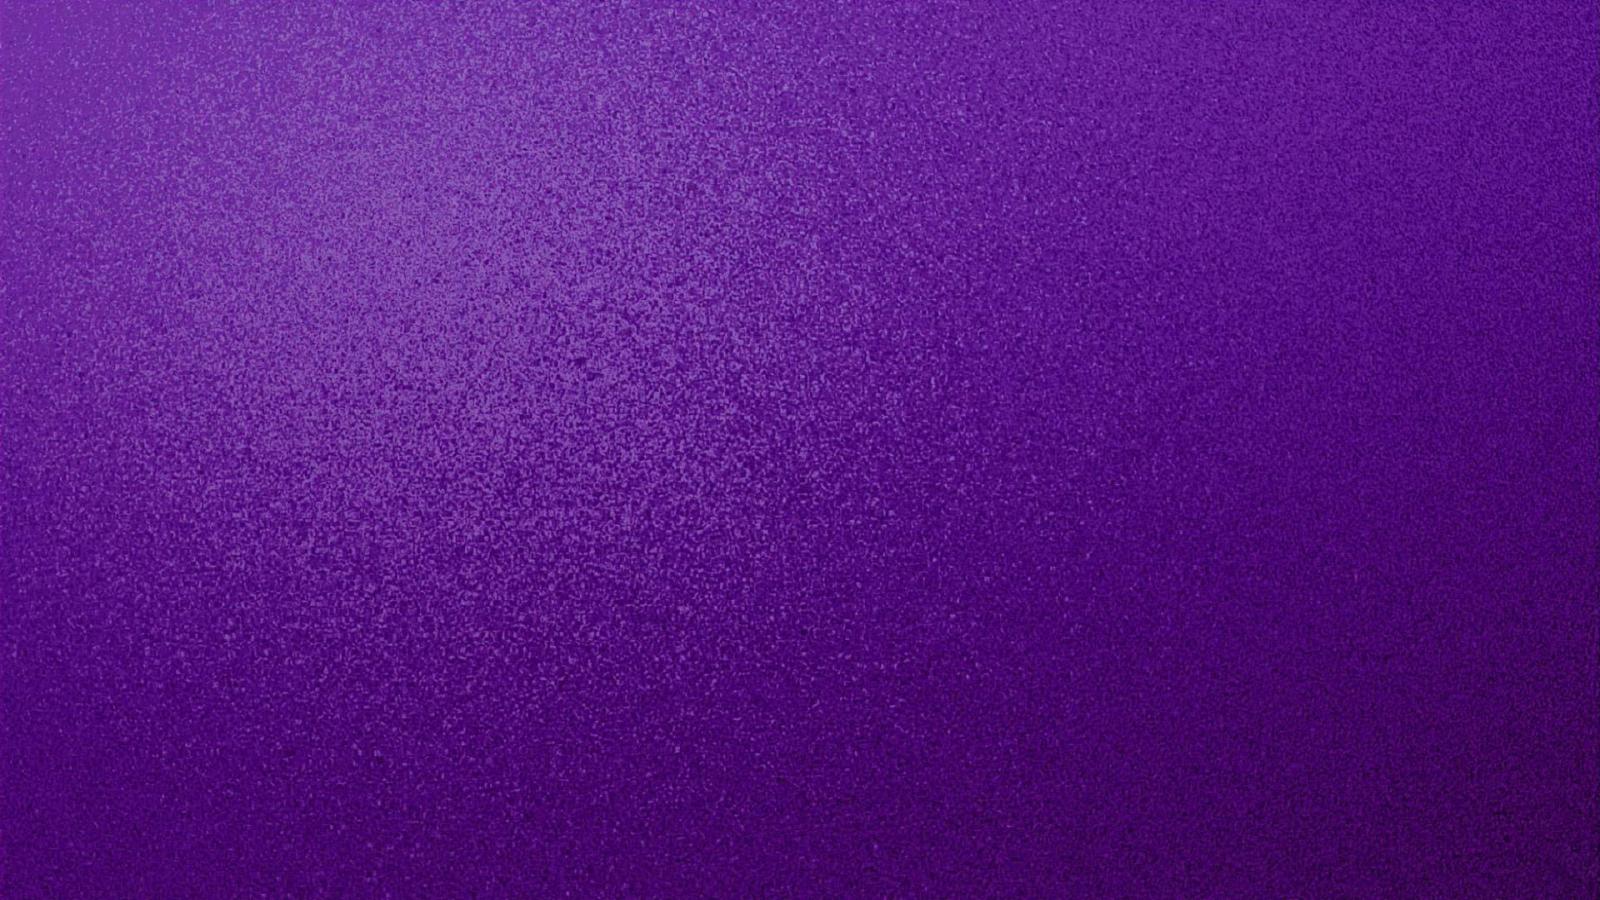 Purple Background Wallpaper 22914 1600x900 px